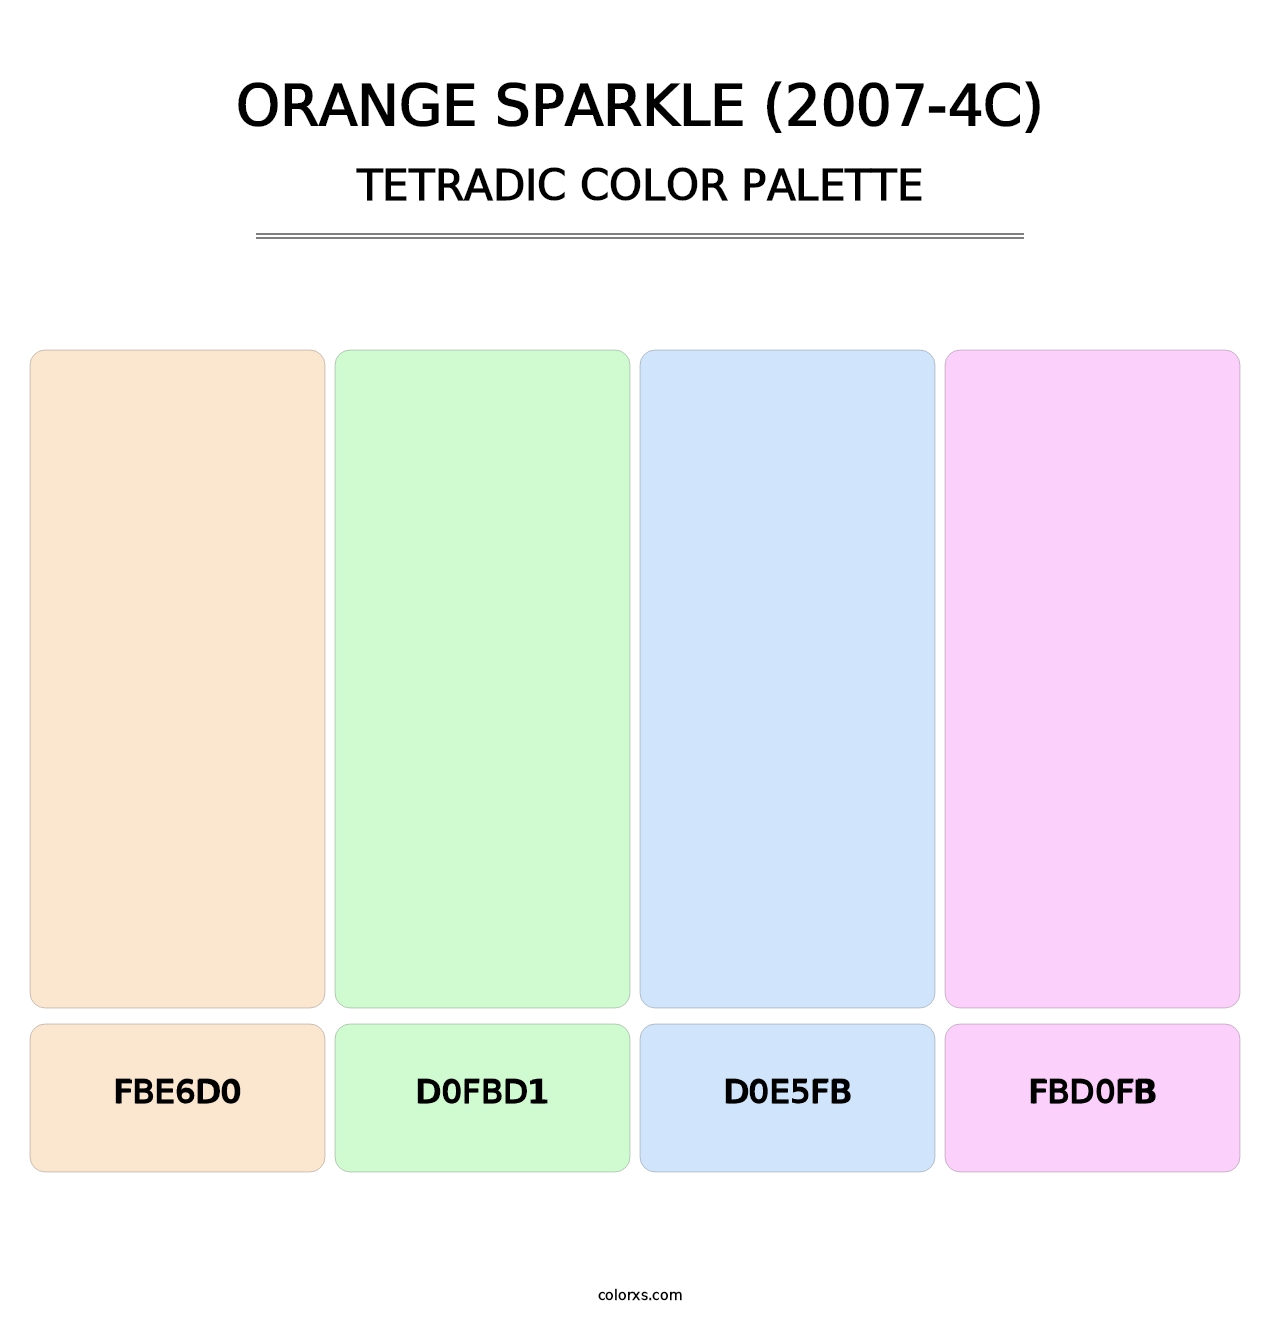 Orange Sparkle (2007-4C) - Tetradic Color Palette